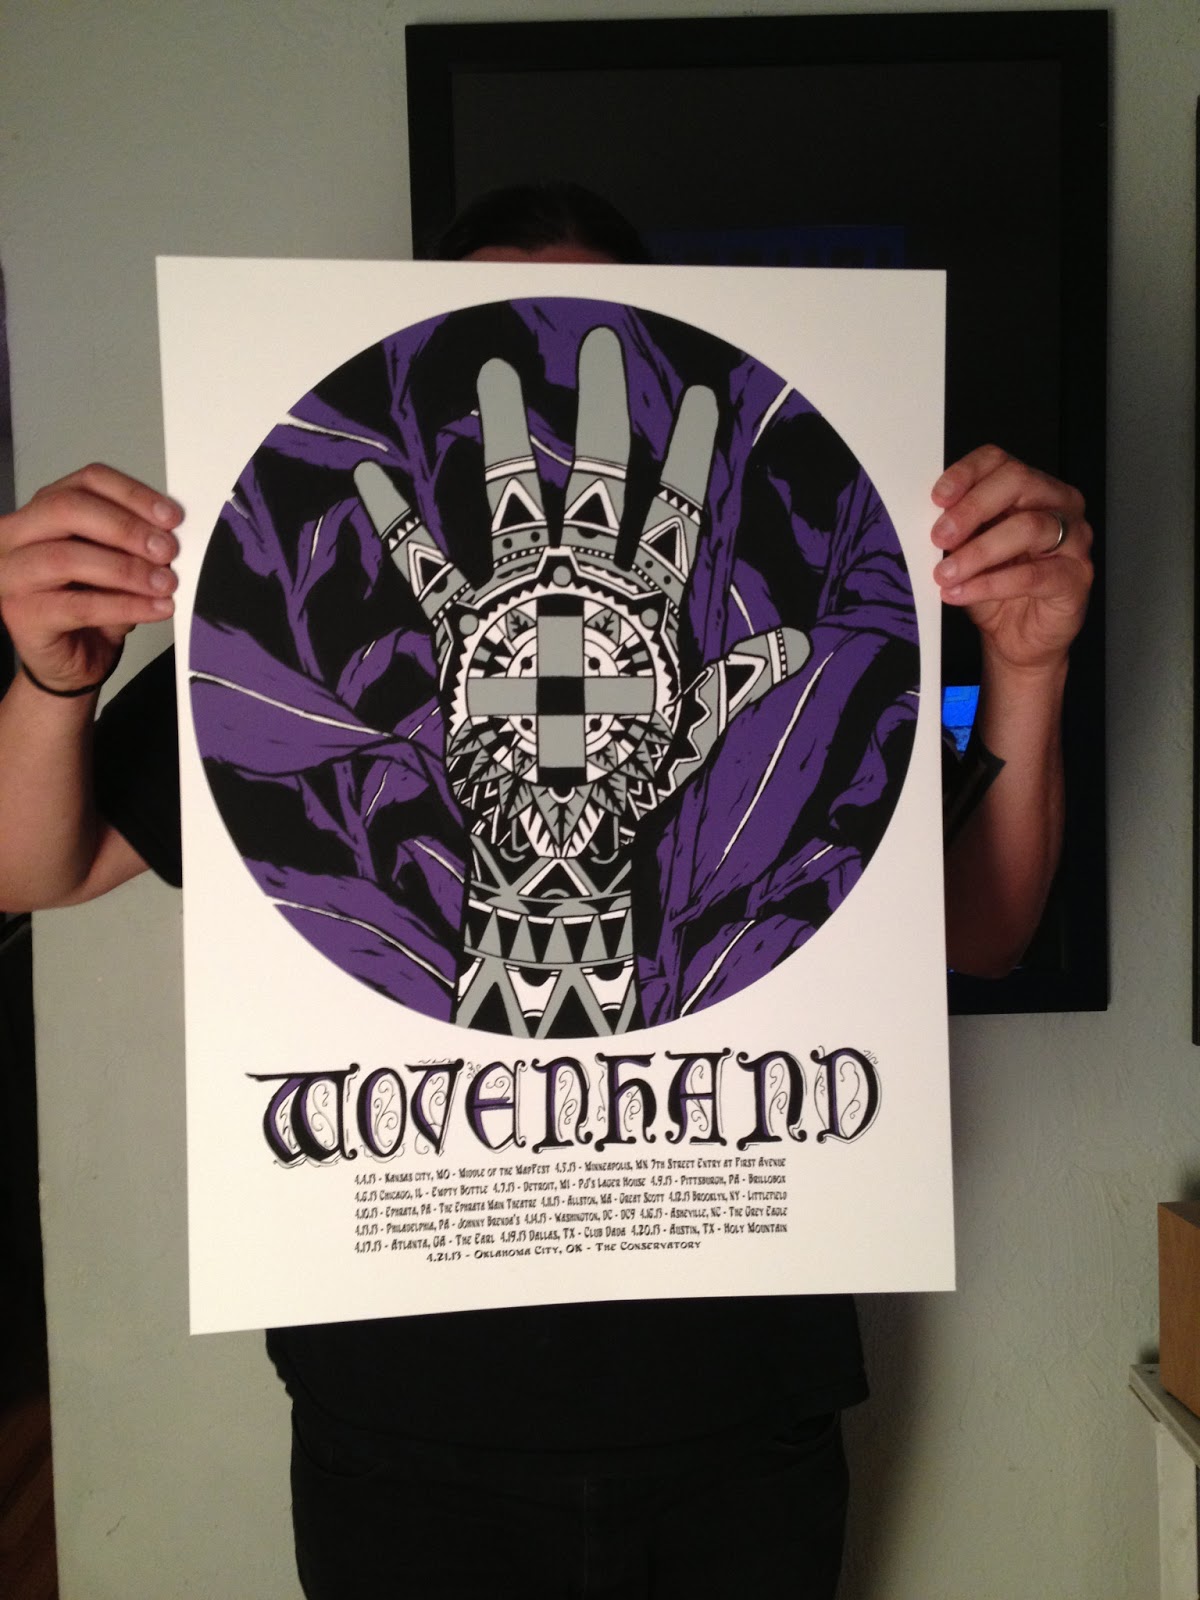 INSIDE THE ROCK POSTER FRAME BLOG: Ryan Mowry Wovenhand Spring Tour ...